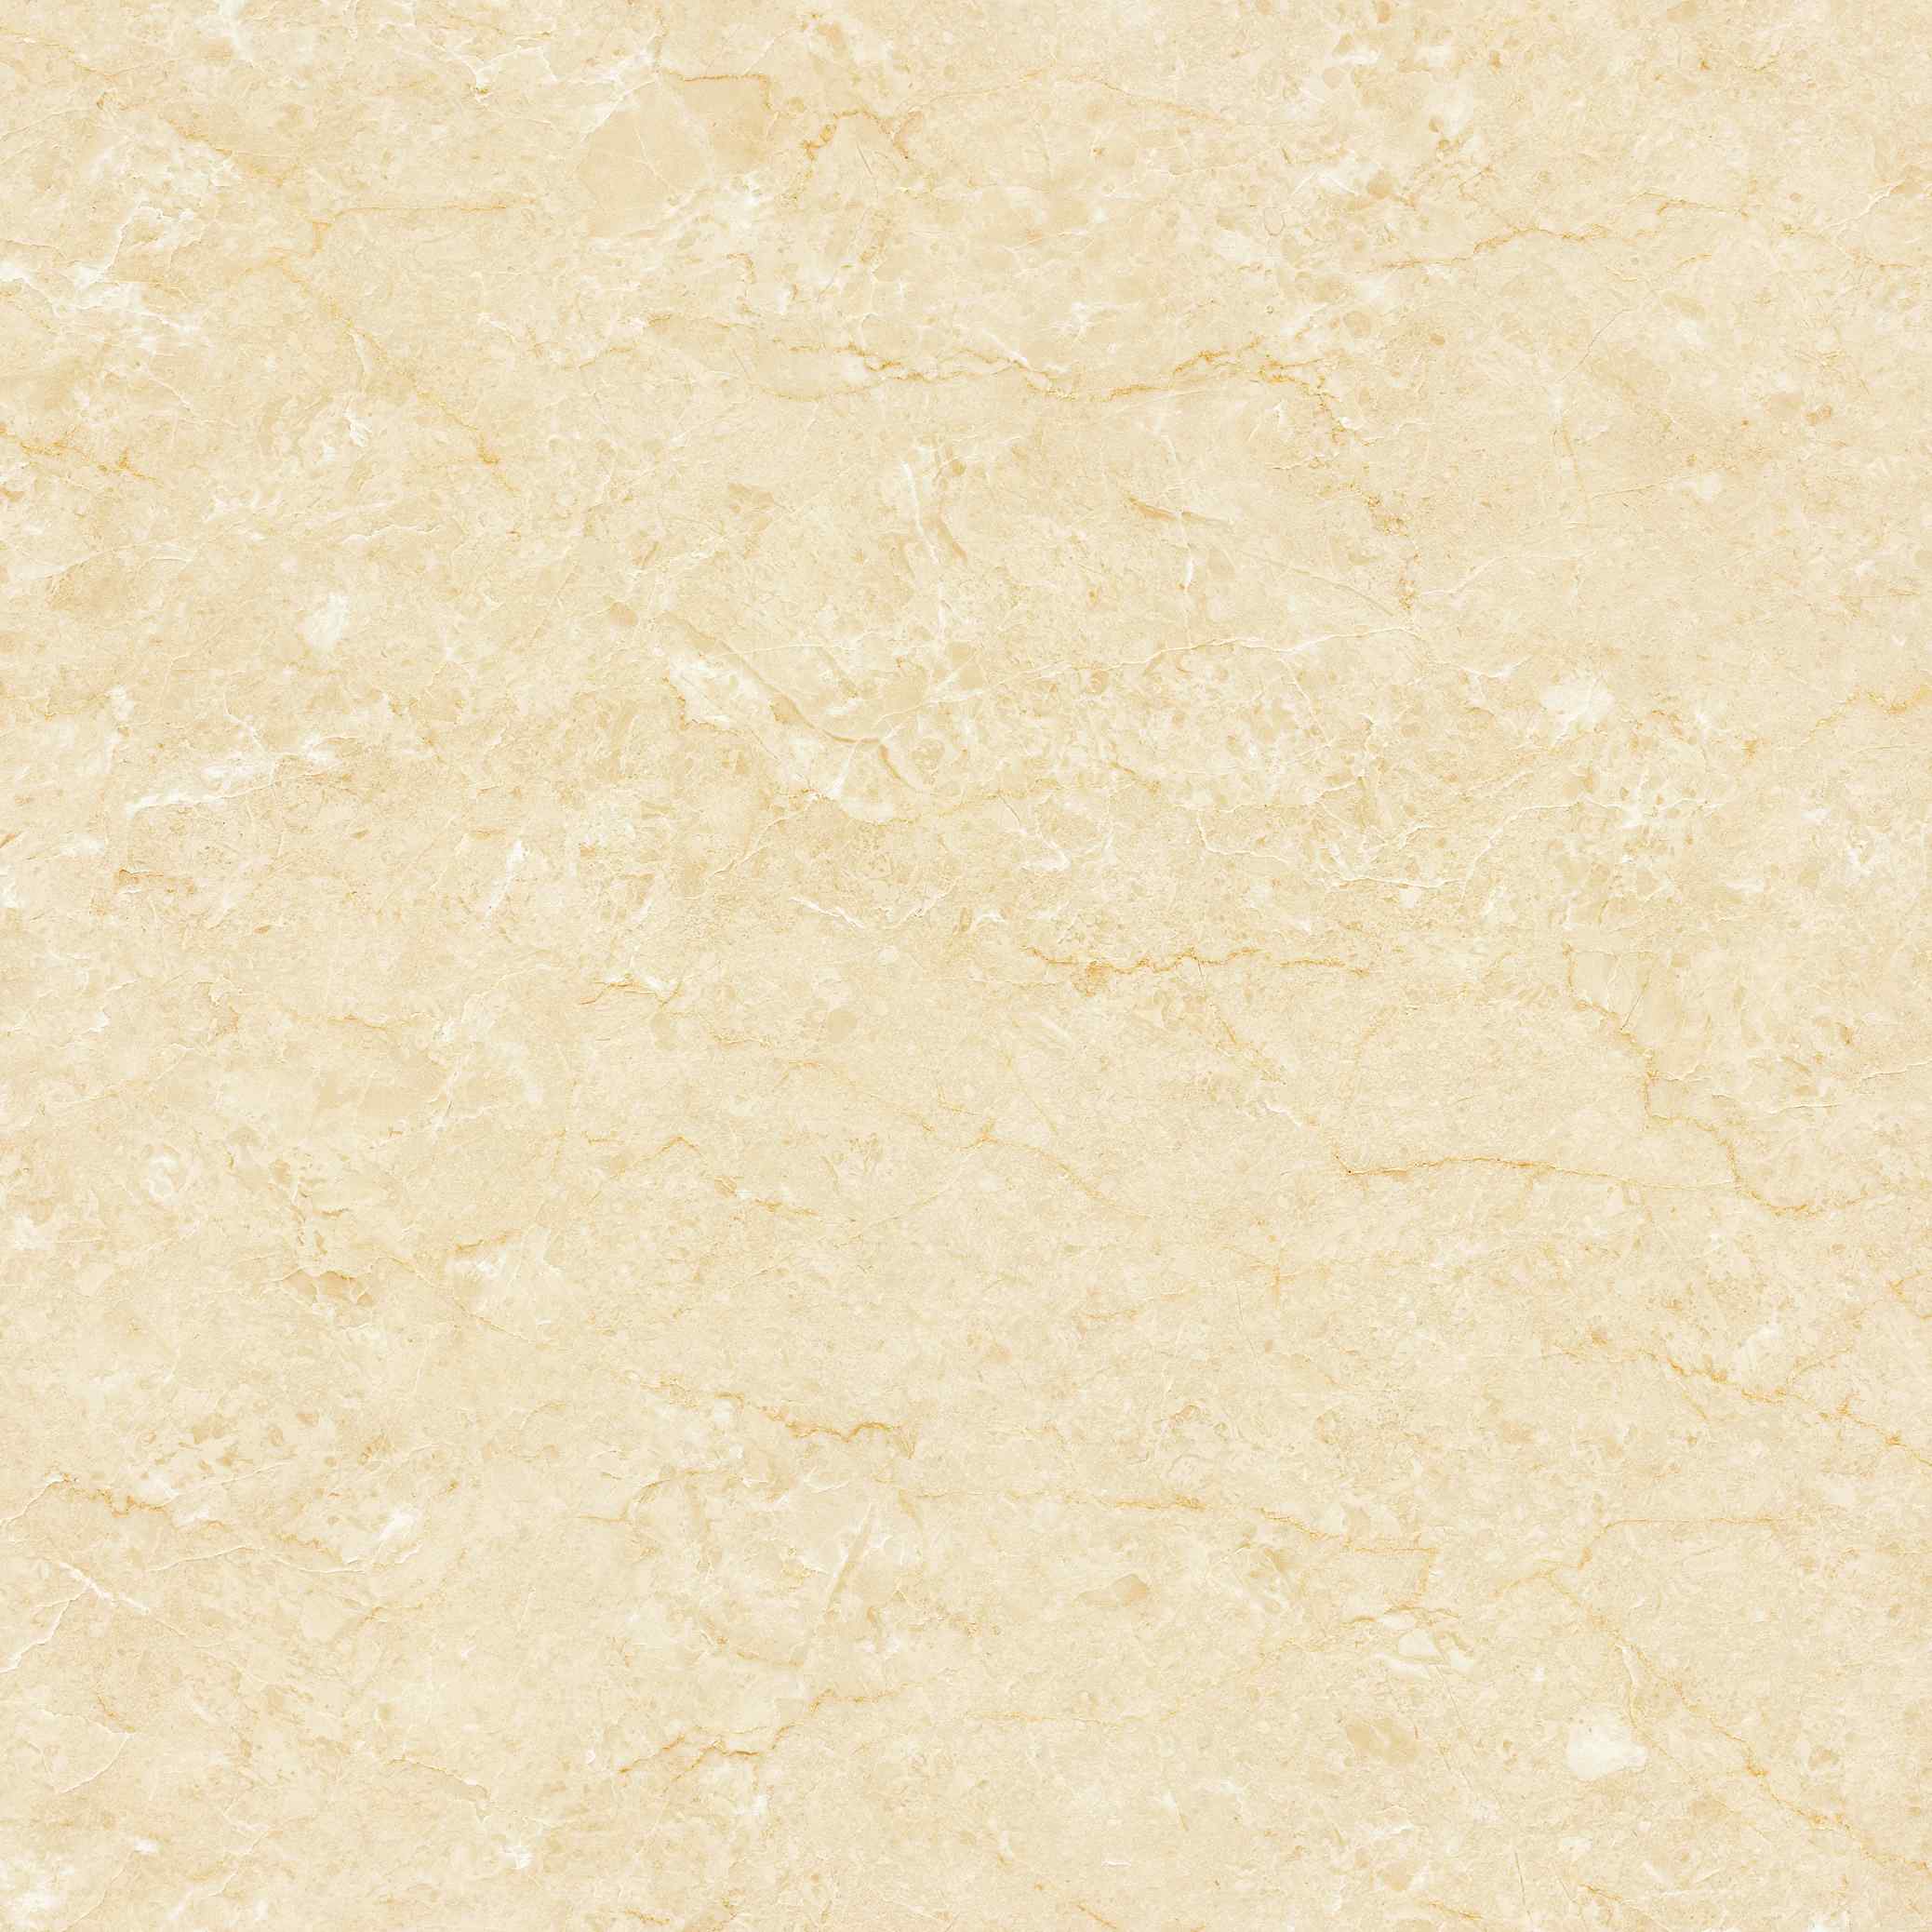 Altman stone full body Marble tile VDLS88237YJ VDLS88614YJ 80x80cm/32X32'